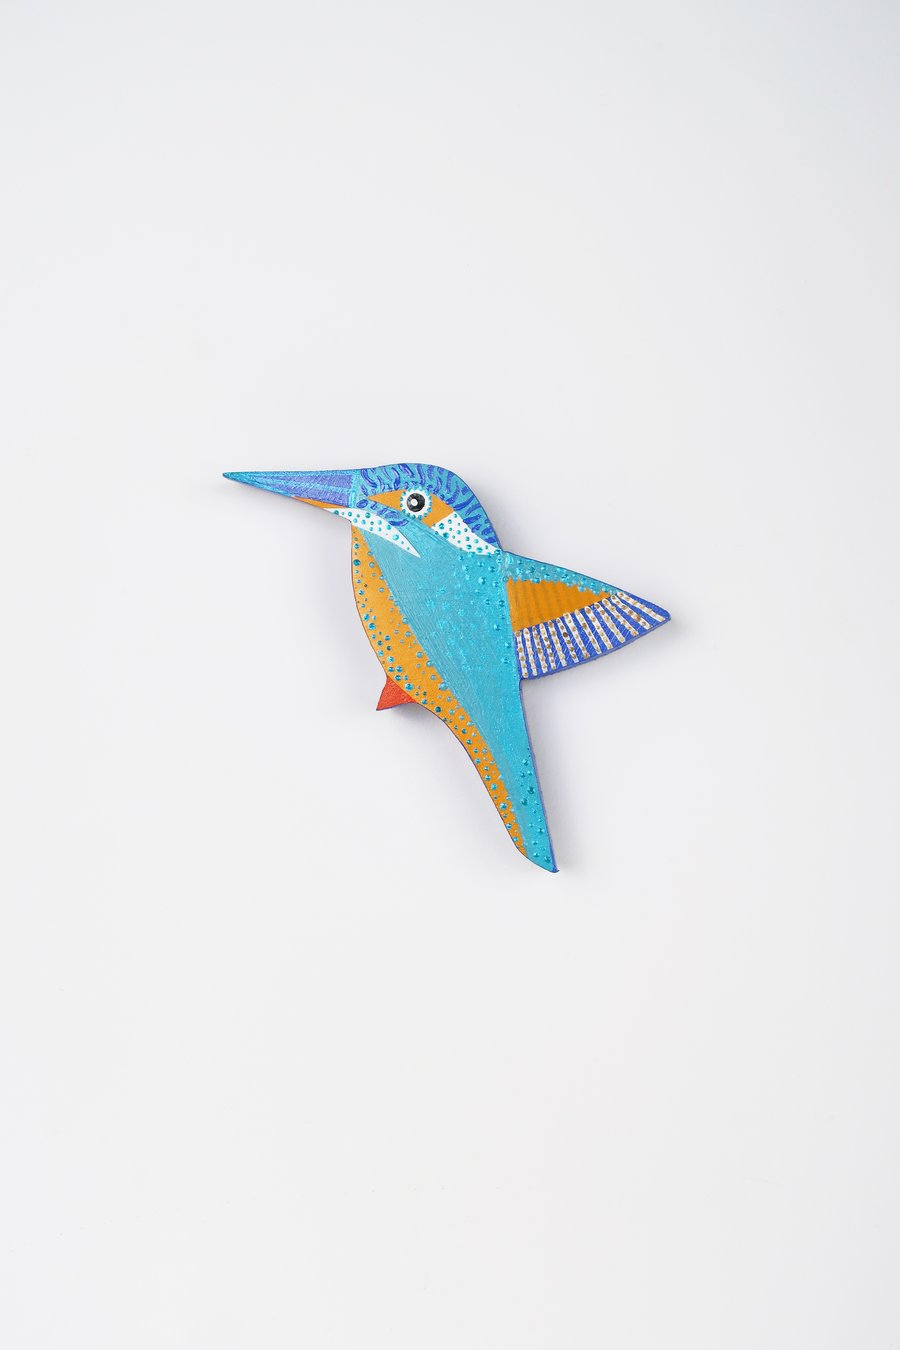 Kingfisher wall hanging, miniature bird art, gift for bird lover.